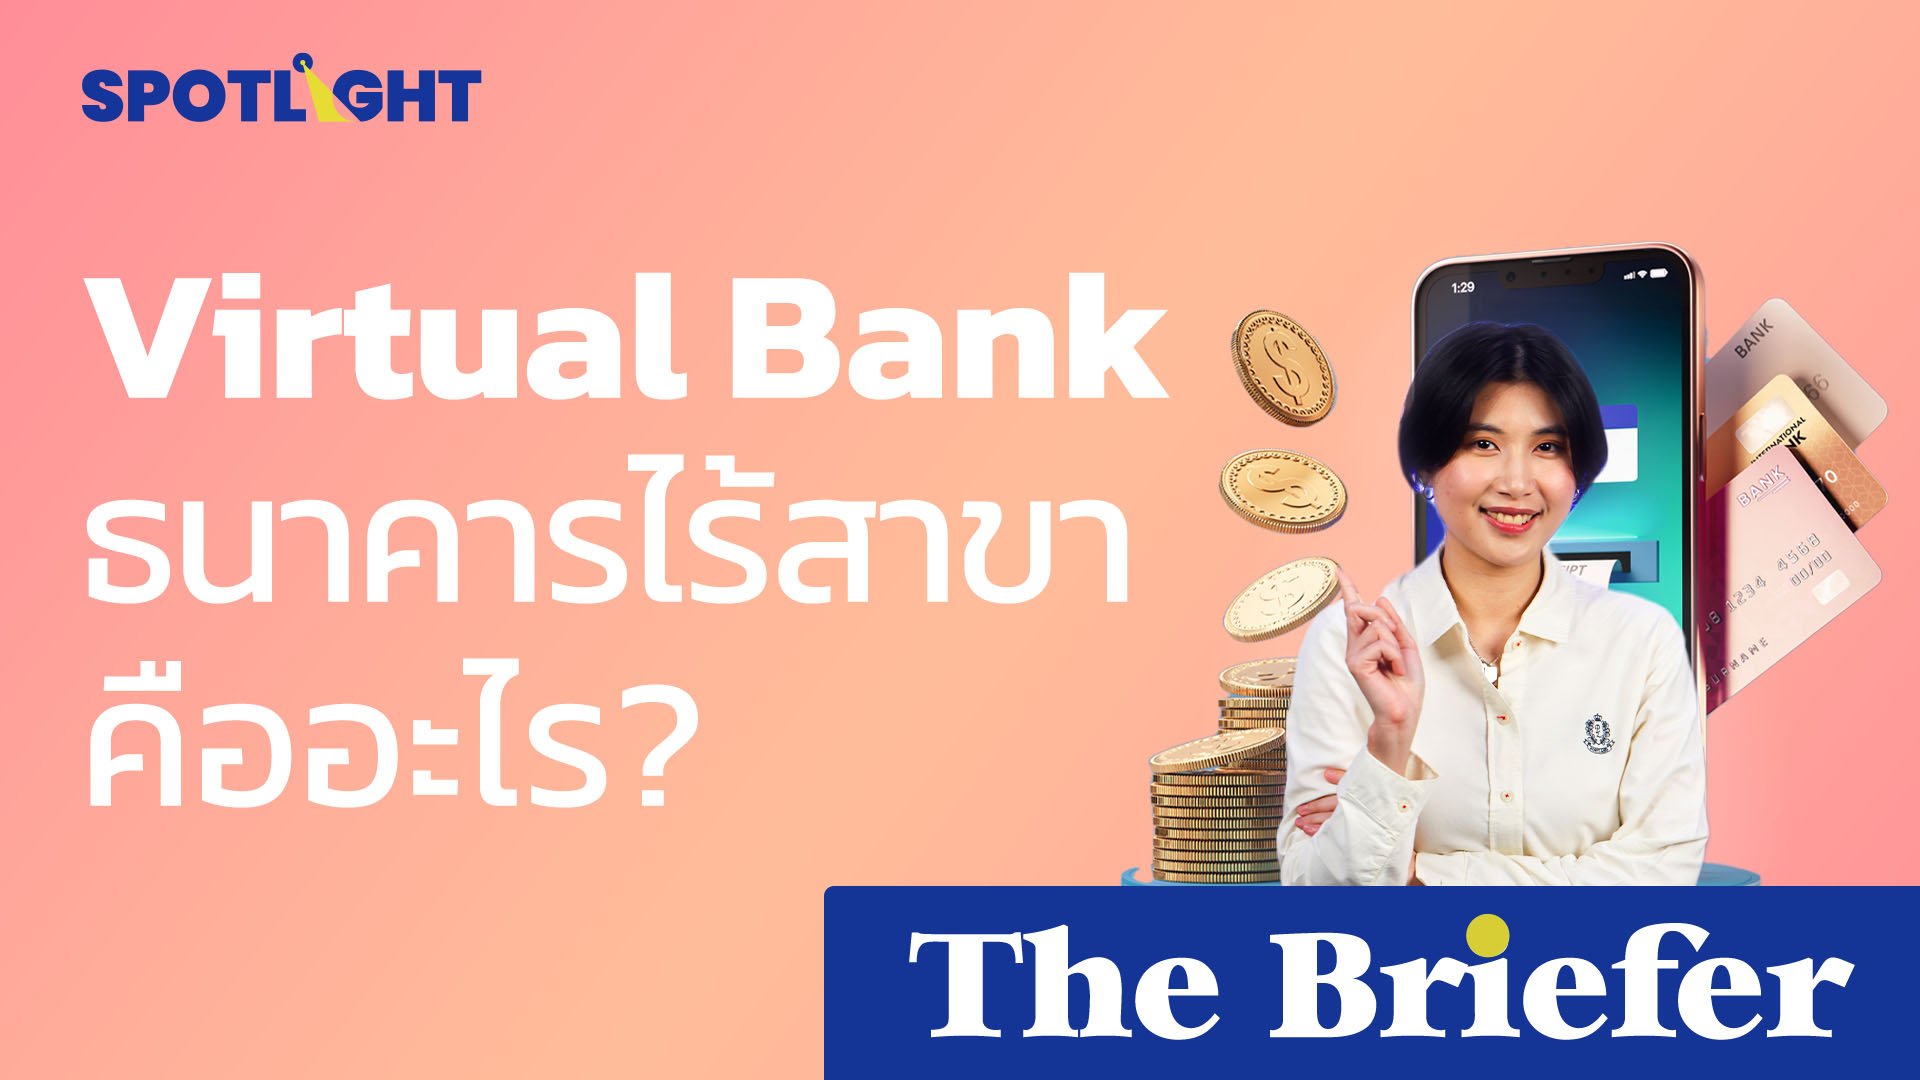 Virtual Bank ธนาคารไร้สาขา คืออะไร? | Spotlight | 27 มี.ค. 67 | AMARIN TVHD34